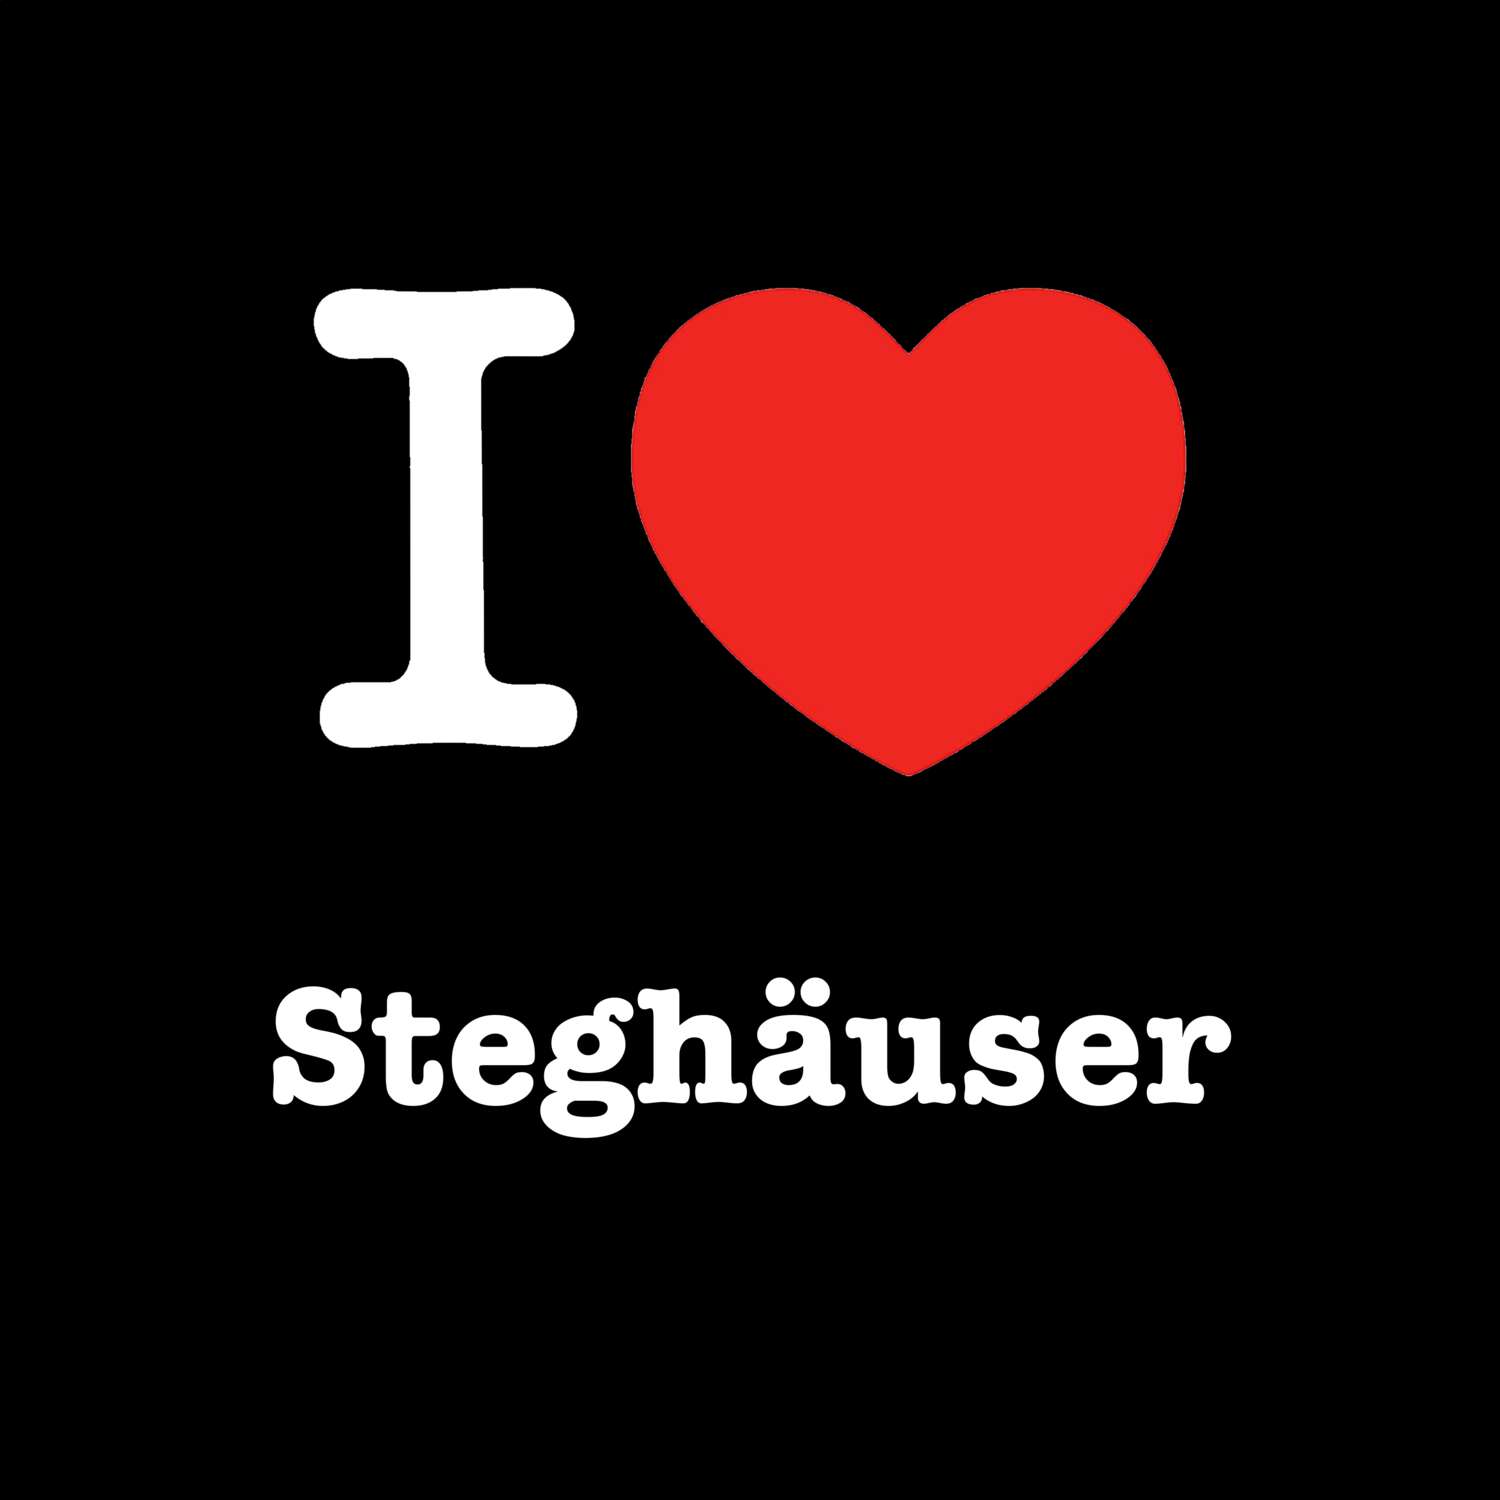 Steghäuser T-Shirt »I love«